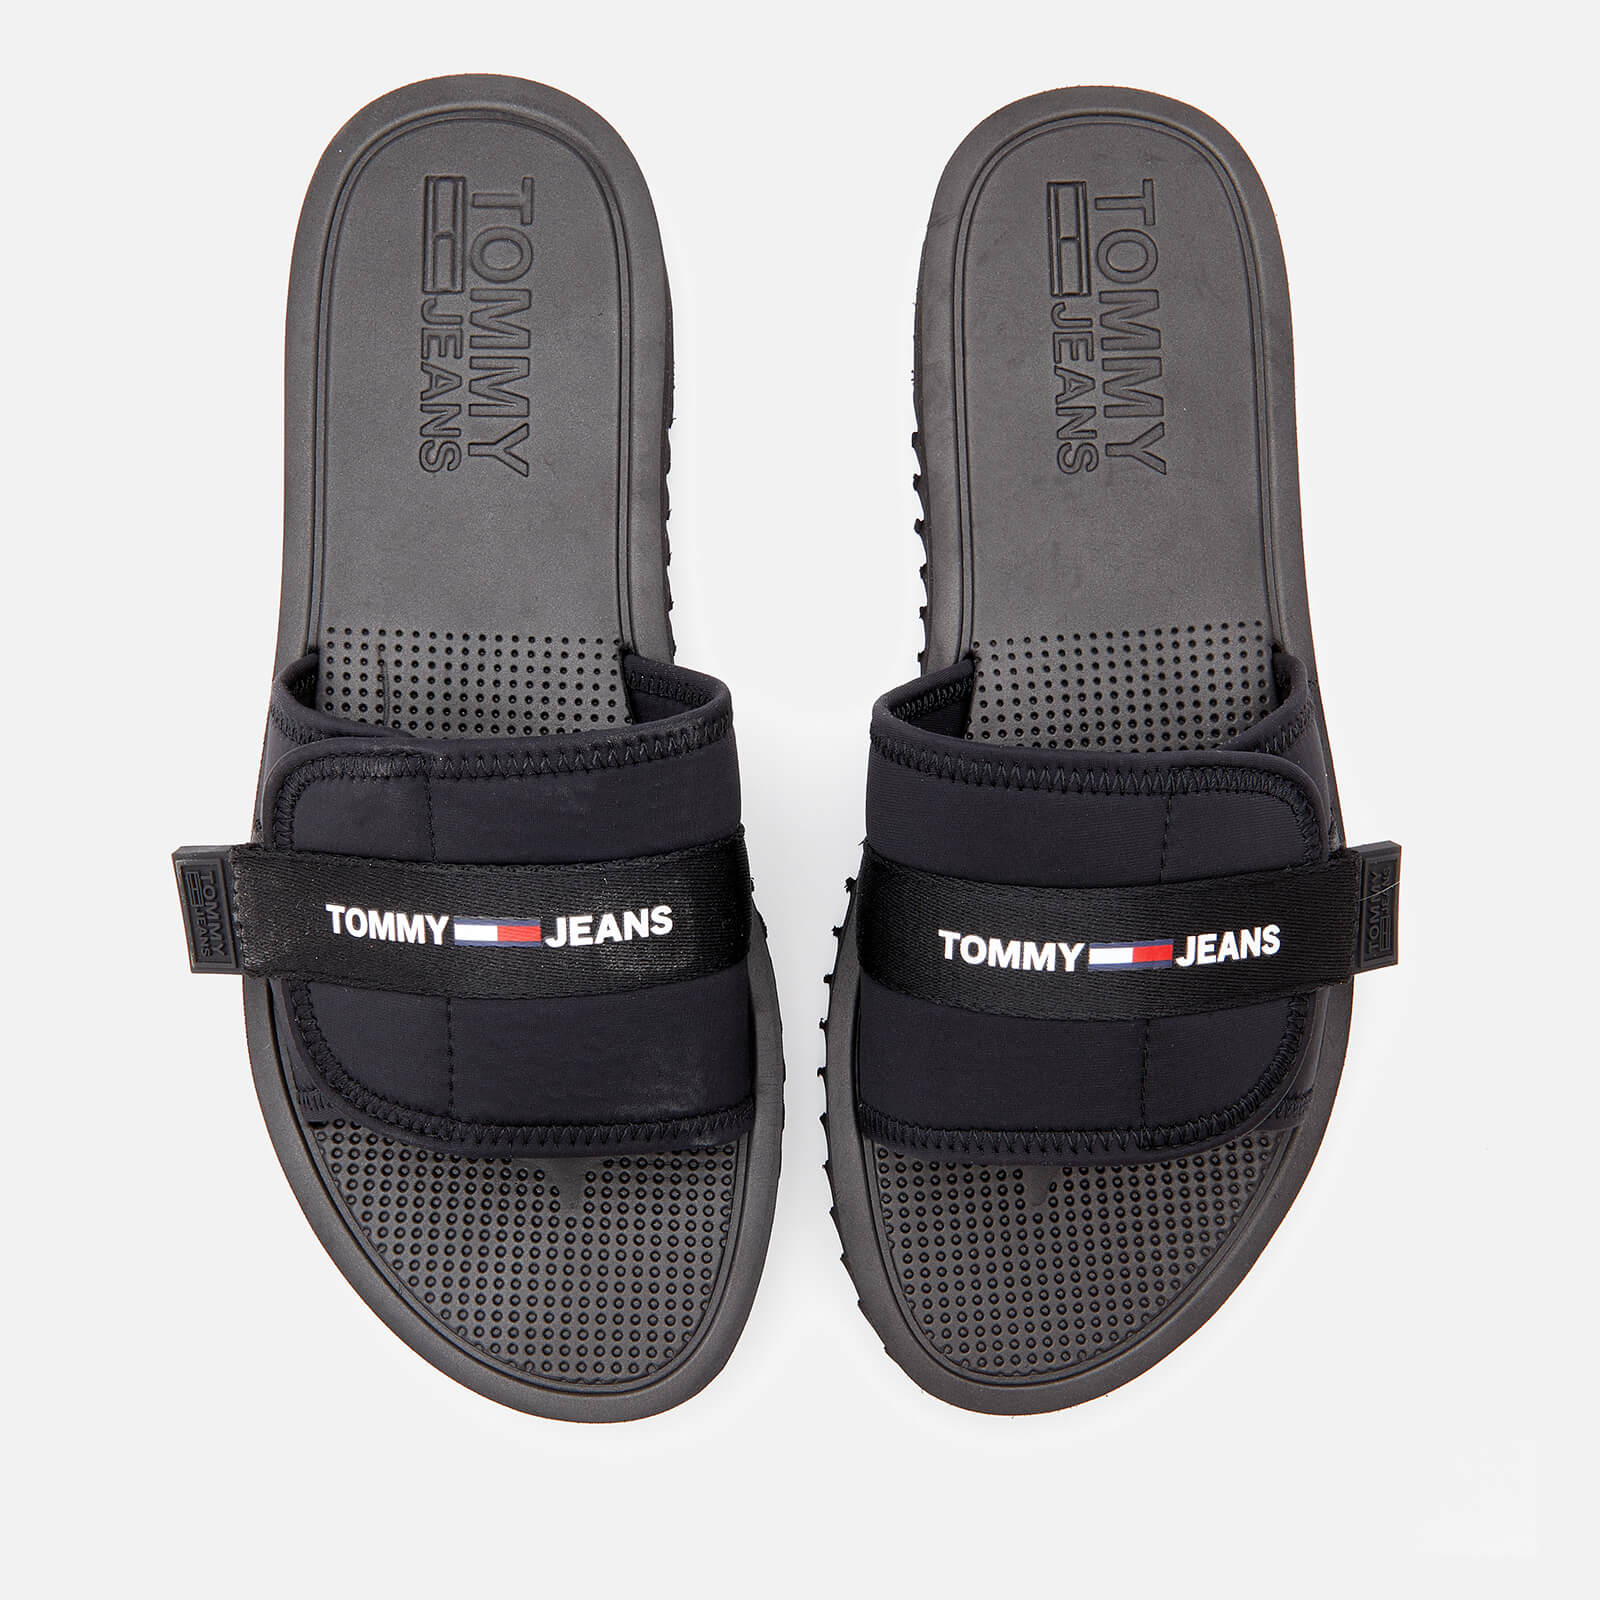 Tommy Jeans Men's Slip On Tech Sandals - Black - UK 7